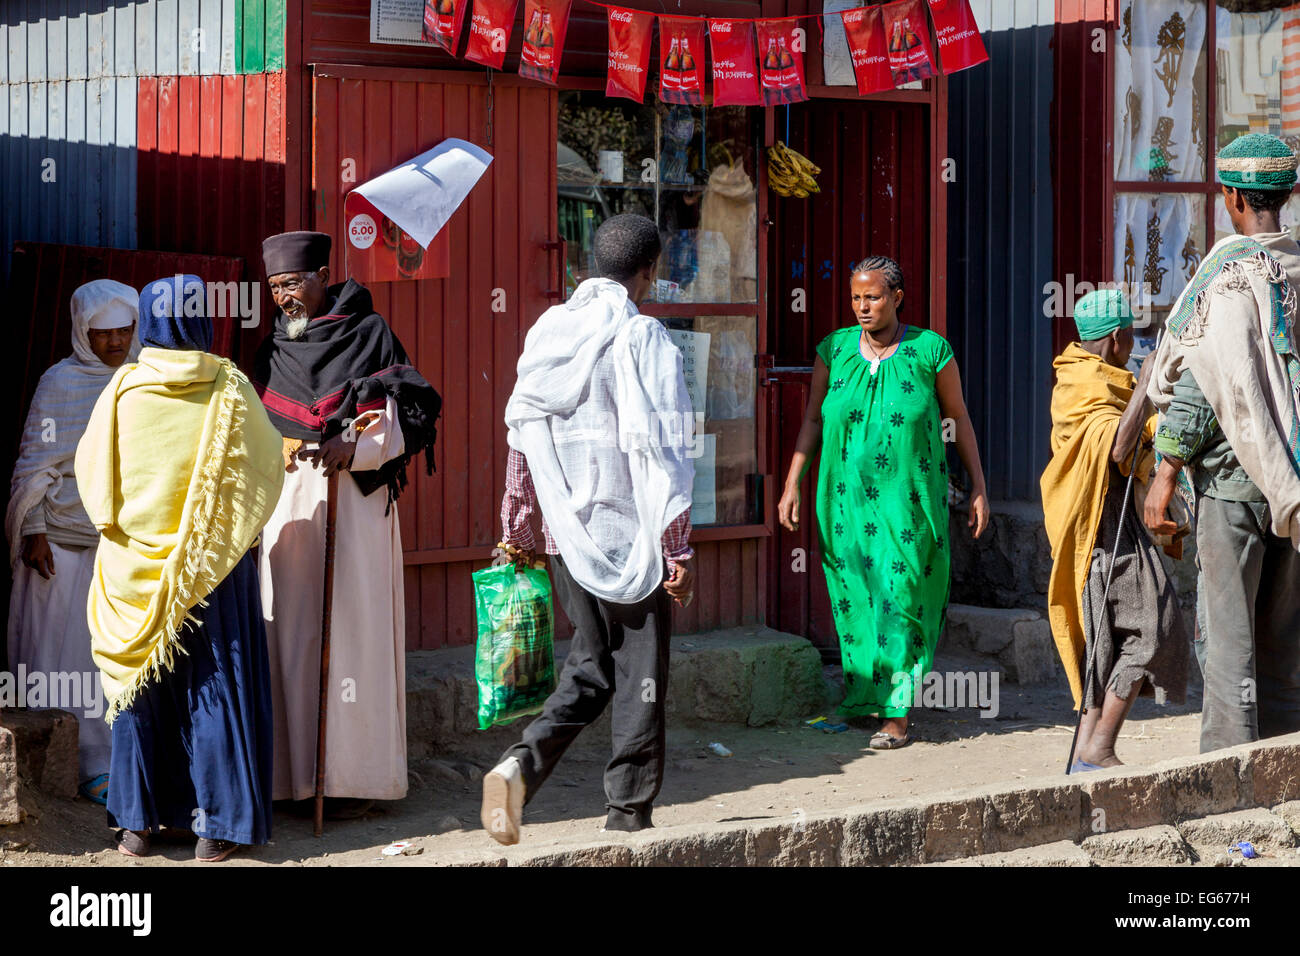 A Group Of People Outside A Mini Supermarket, Lalibela, Ethiopia Stock Photo